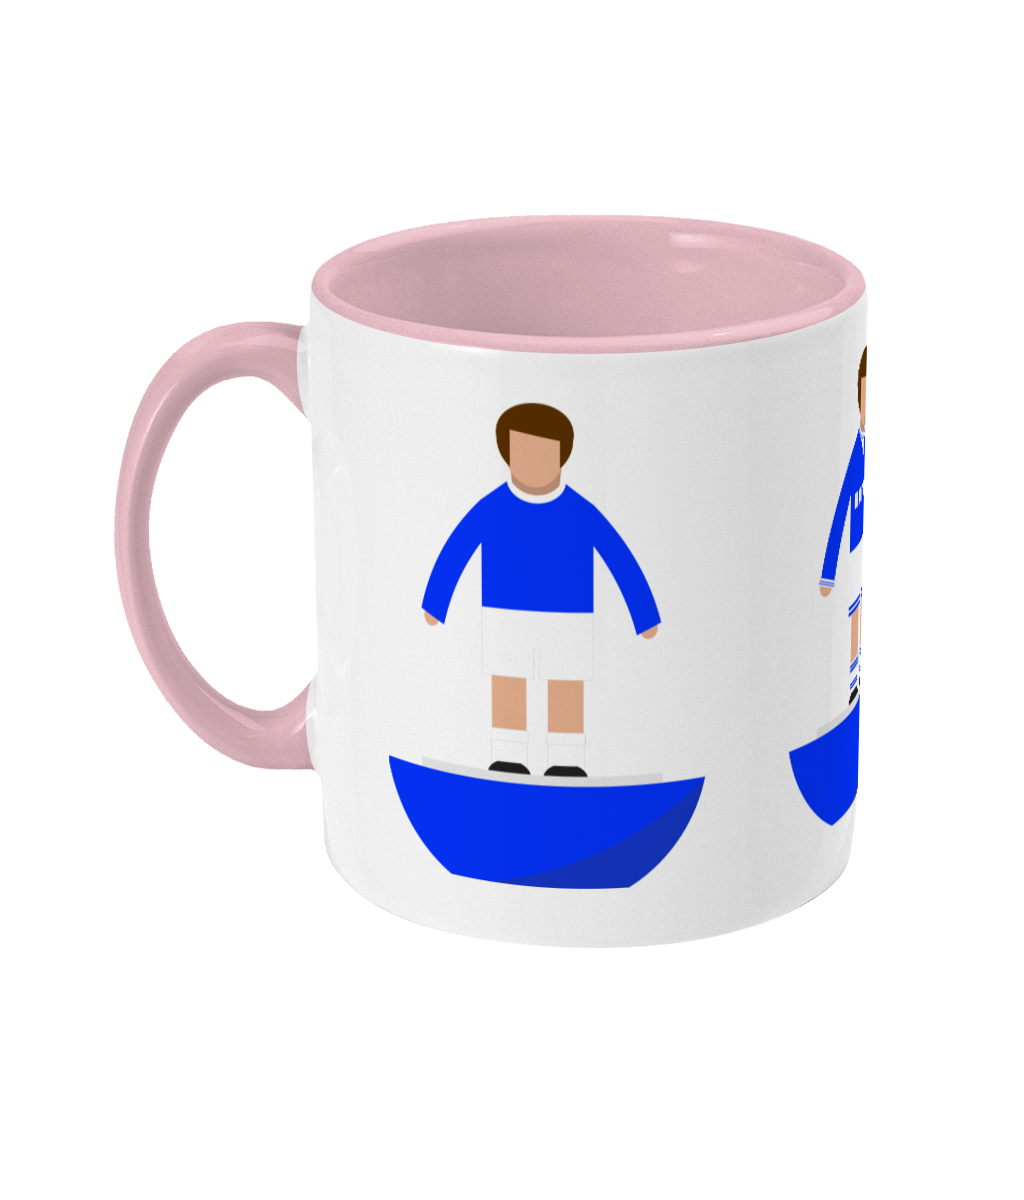 test mug